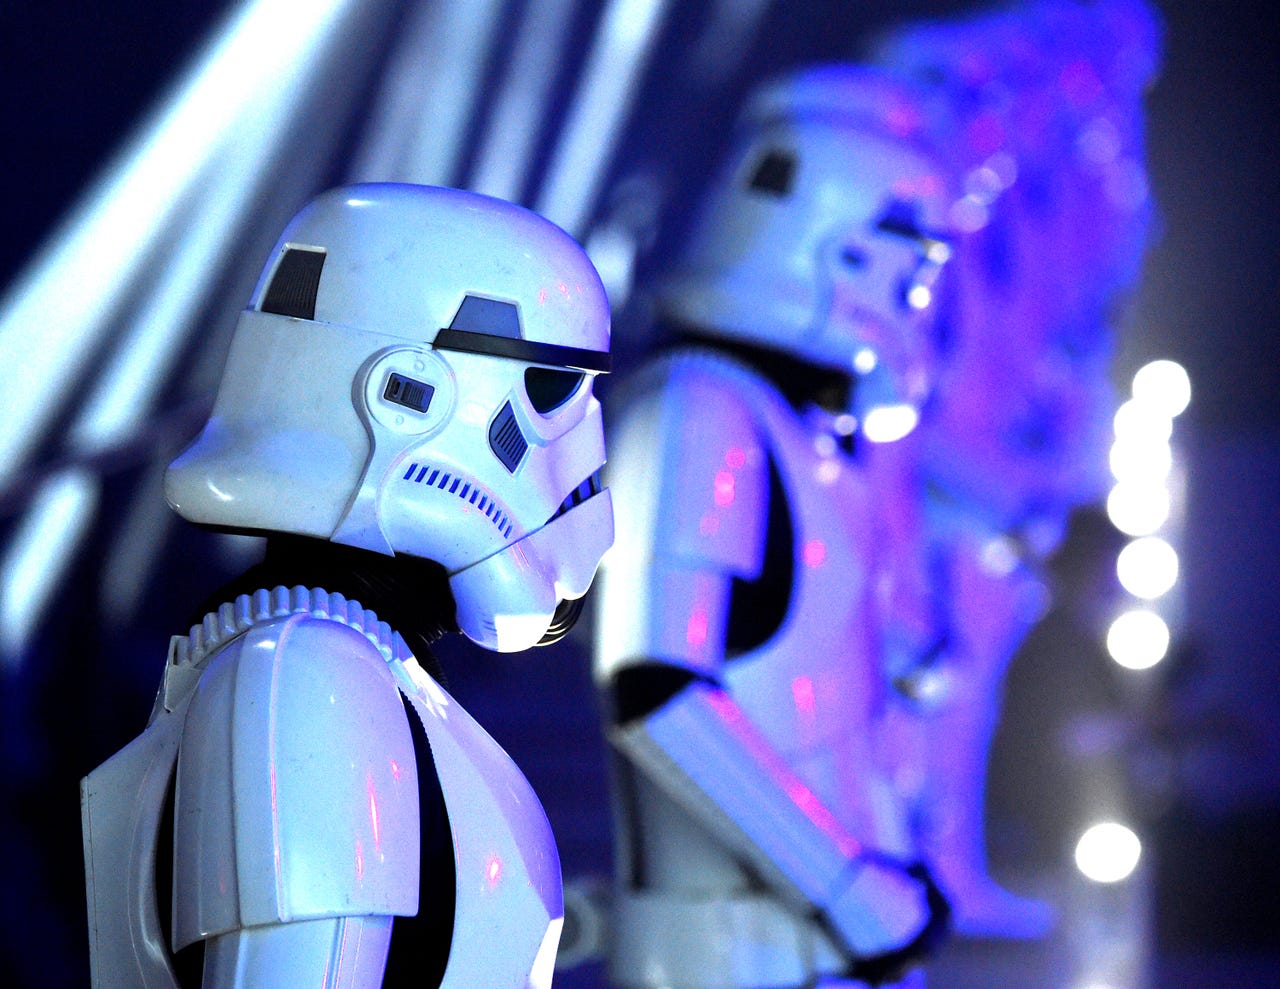 LEGO Star Wars: The Skywalker Saga beginner's guide